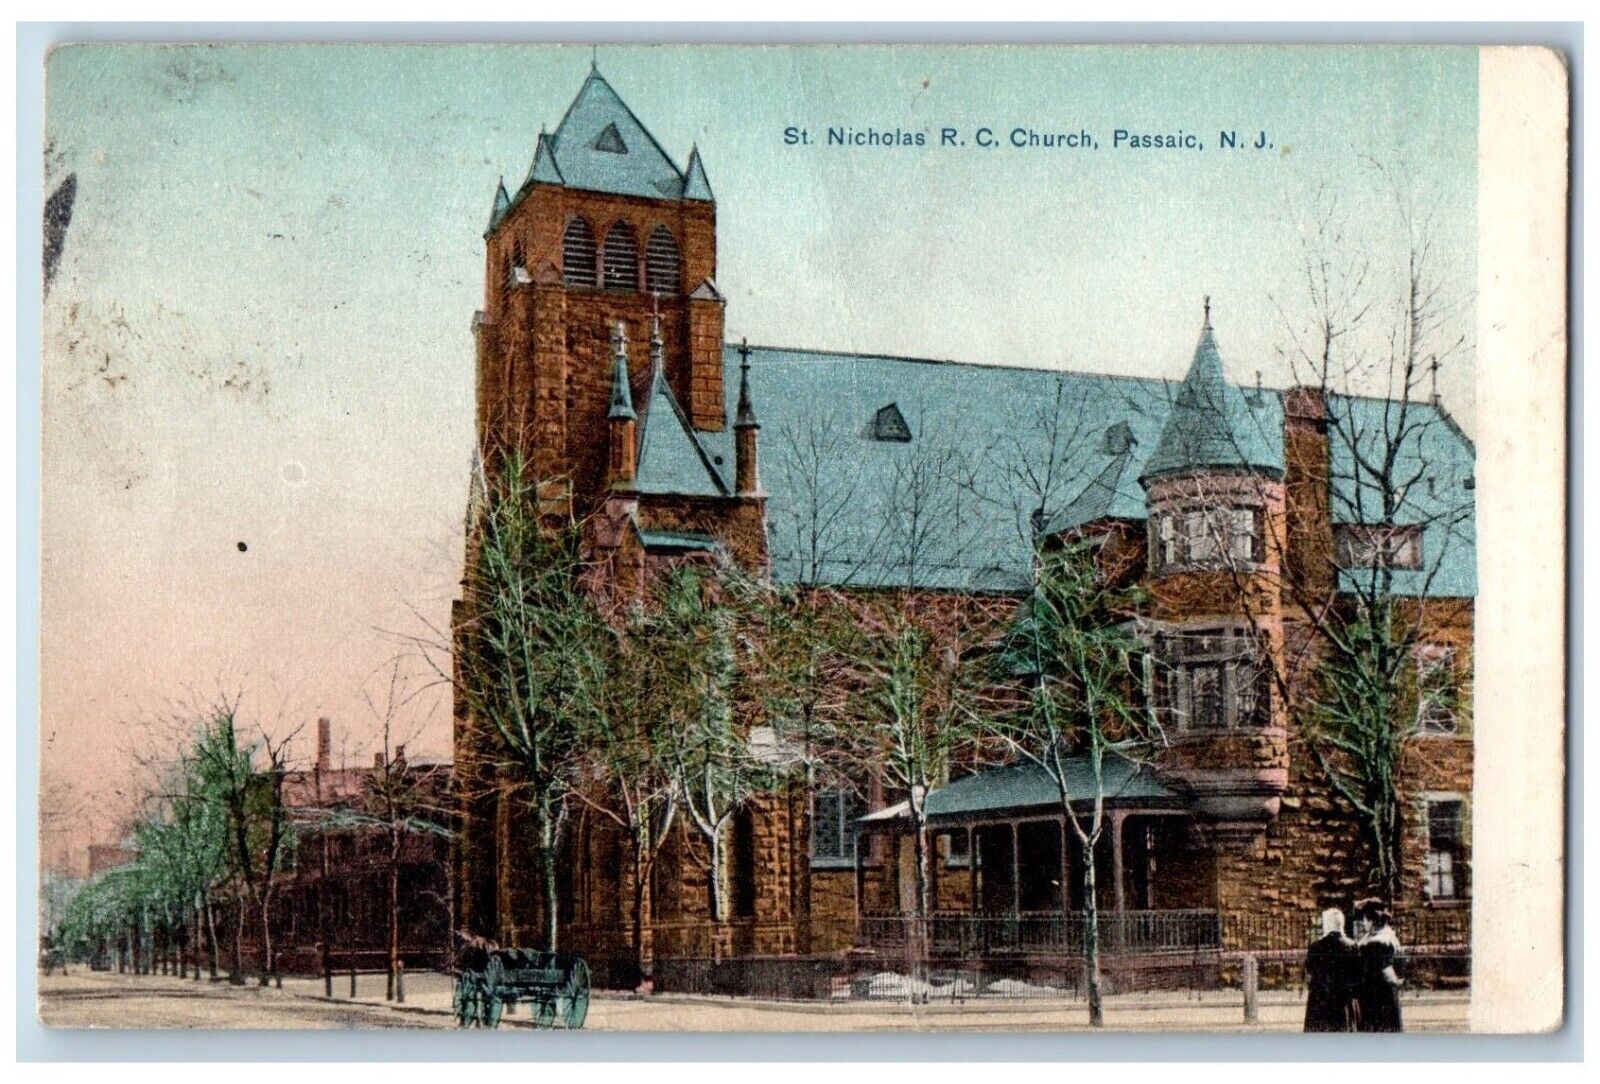 Passaic New Jersey Postcard St. Nicholas R.C. Church Exterior View 1911 Vintage